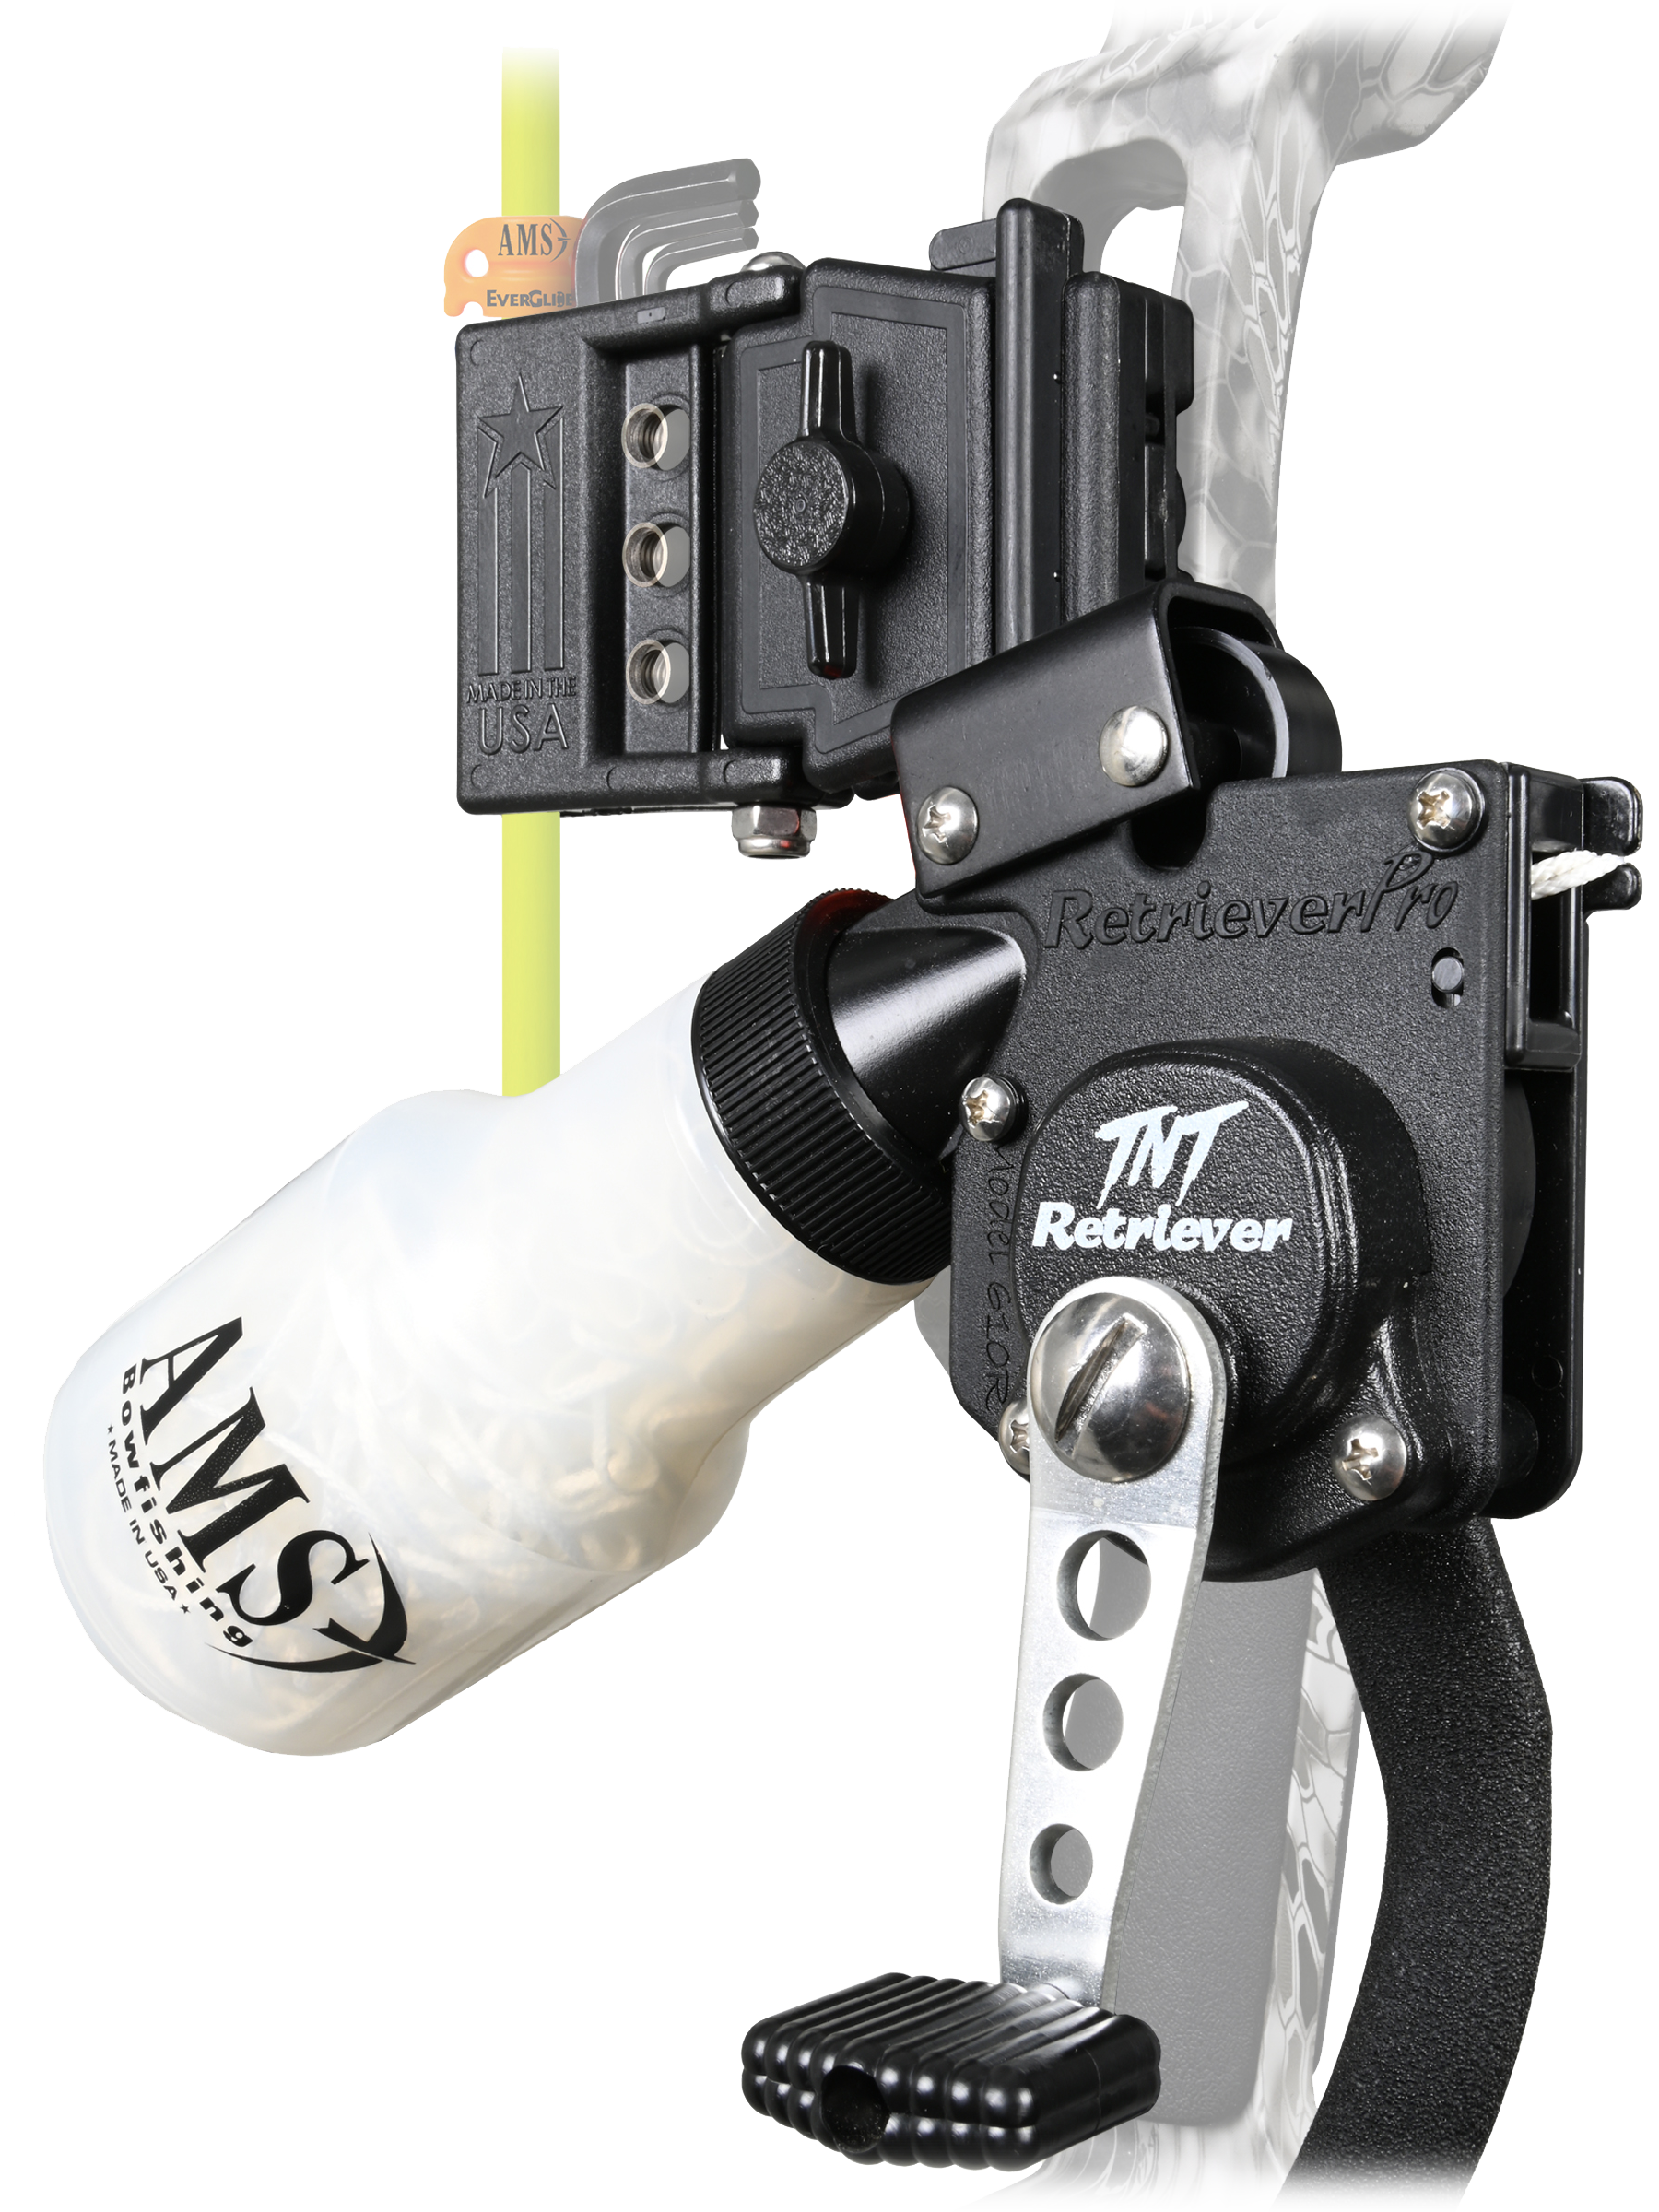 AMS Bowfishing® 610-CMB-RH Right-Hand Retriever Pro Combo Kit at